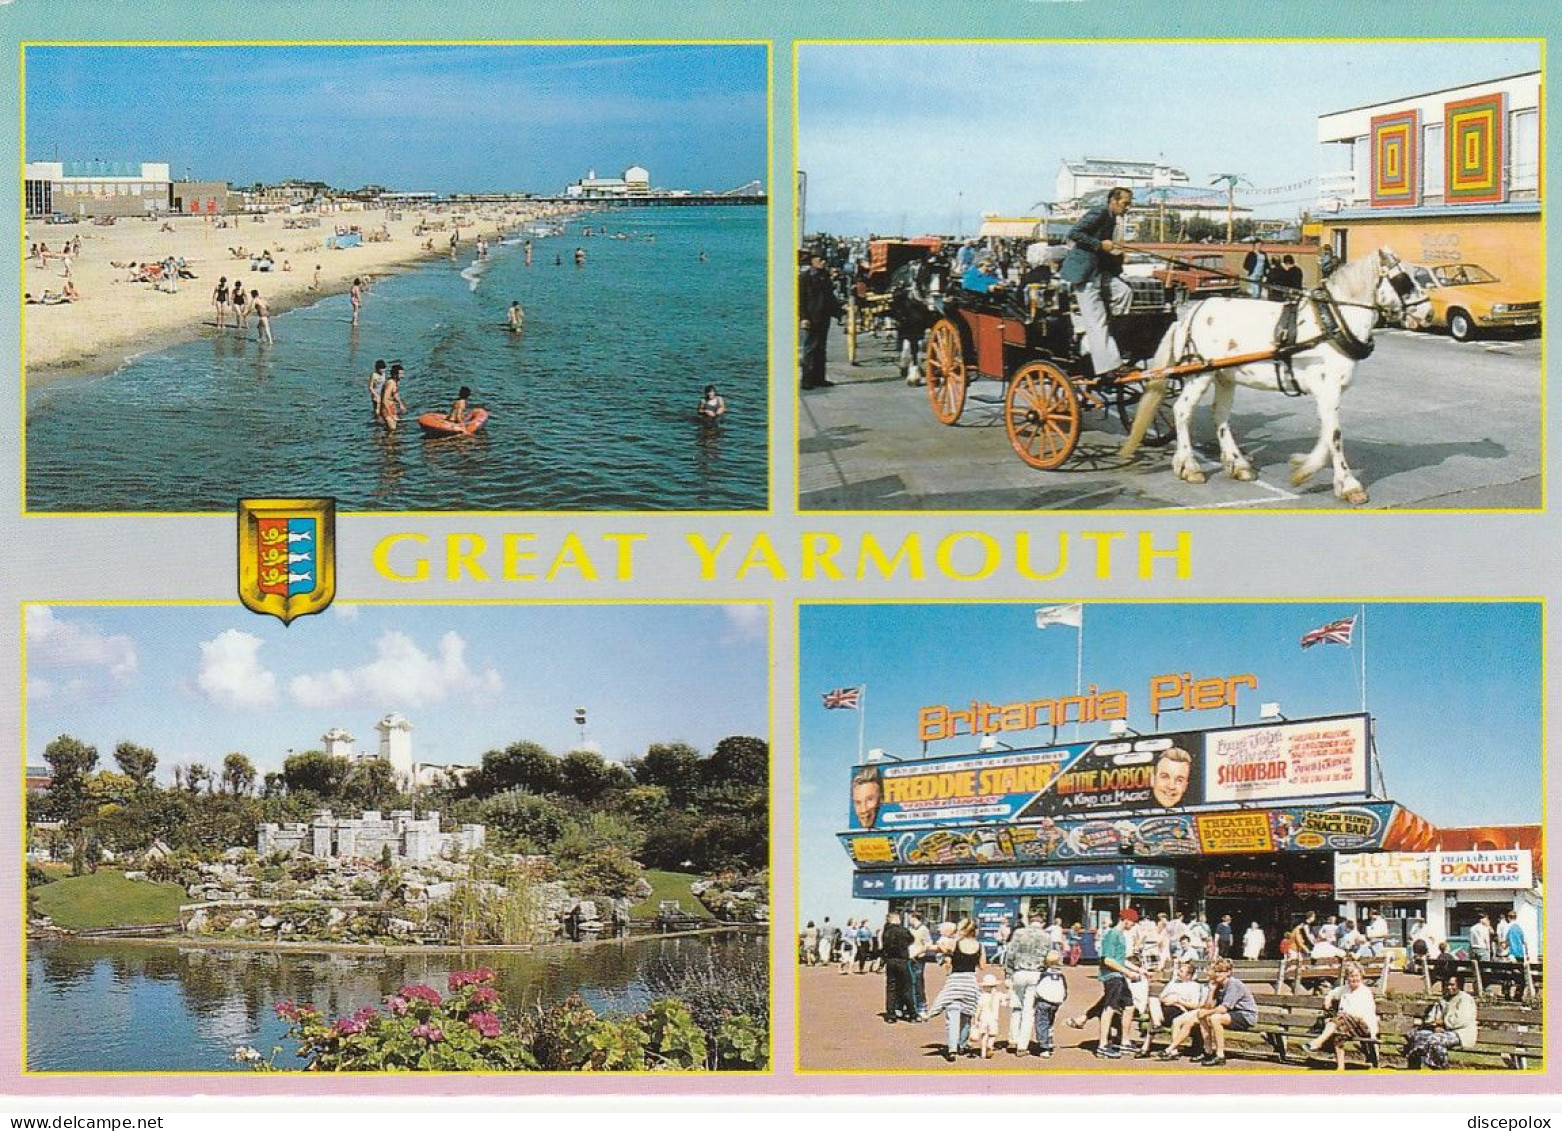 U5710 Greetings From Great Yaemouth / Viaggiata 2000 - Great Yarmouth